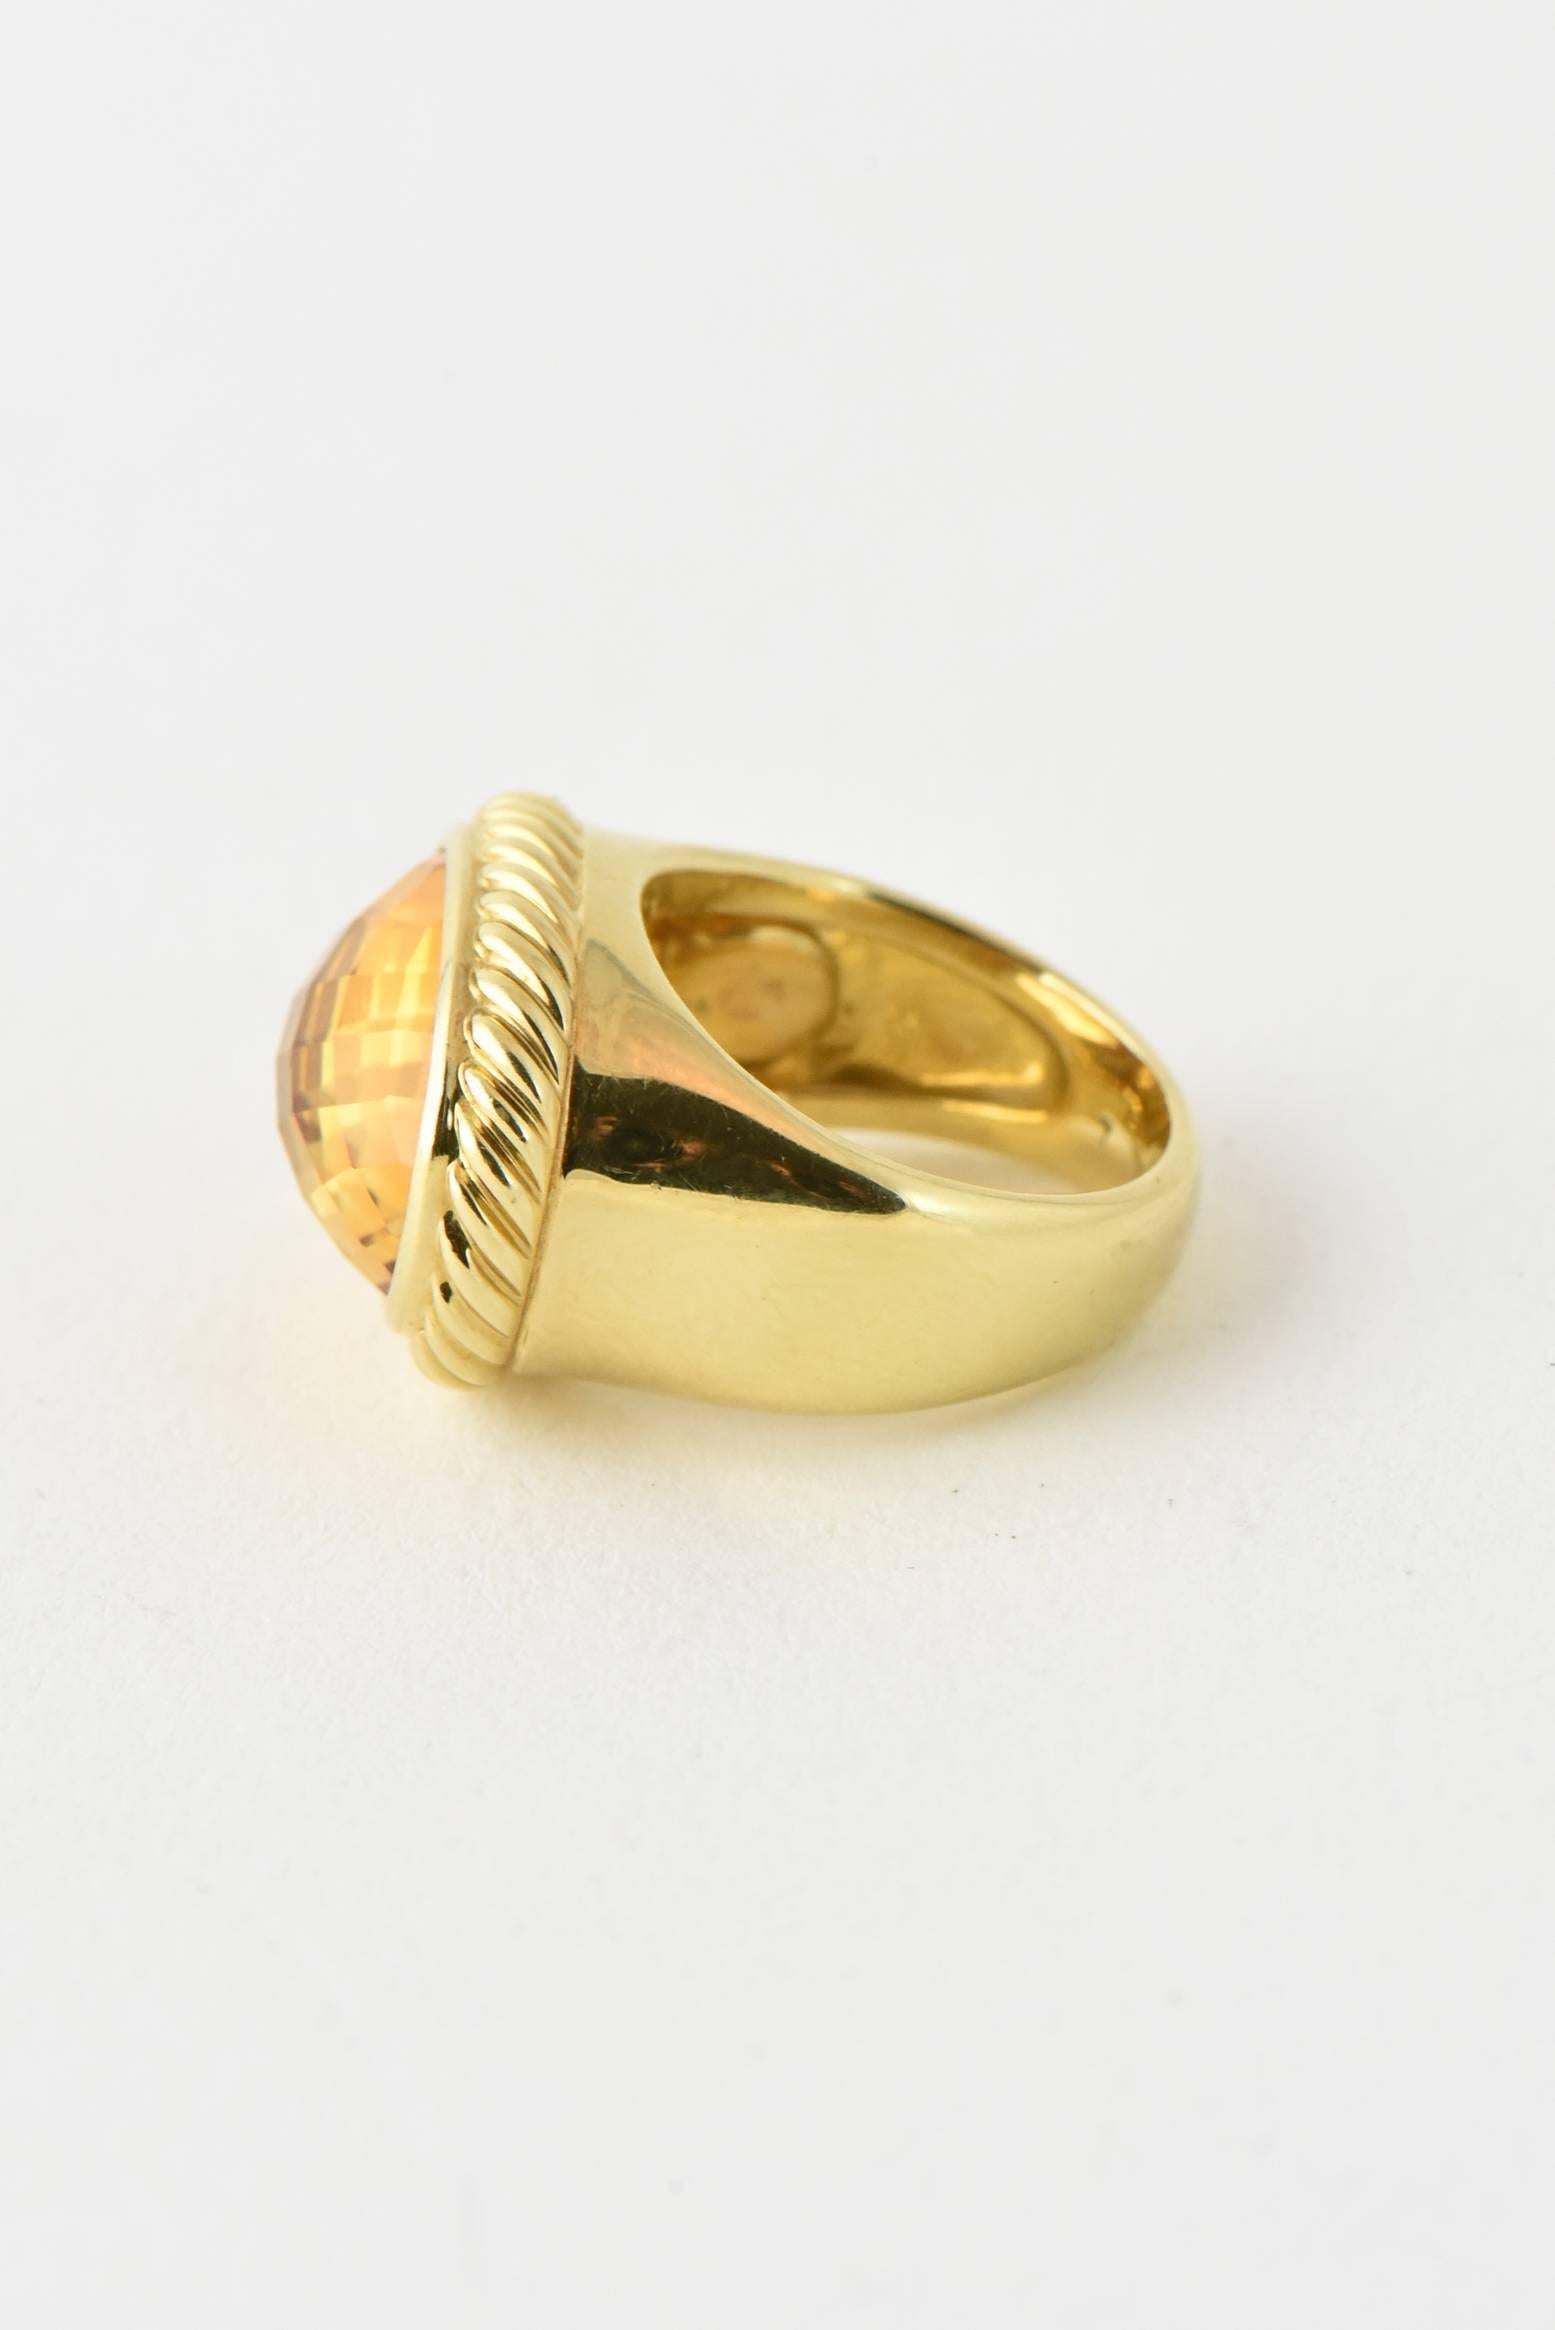 Yurman Citrine Signature Gold Ring For Sale 2